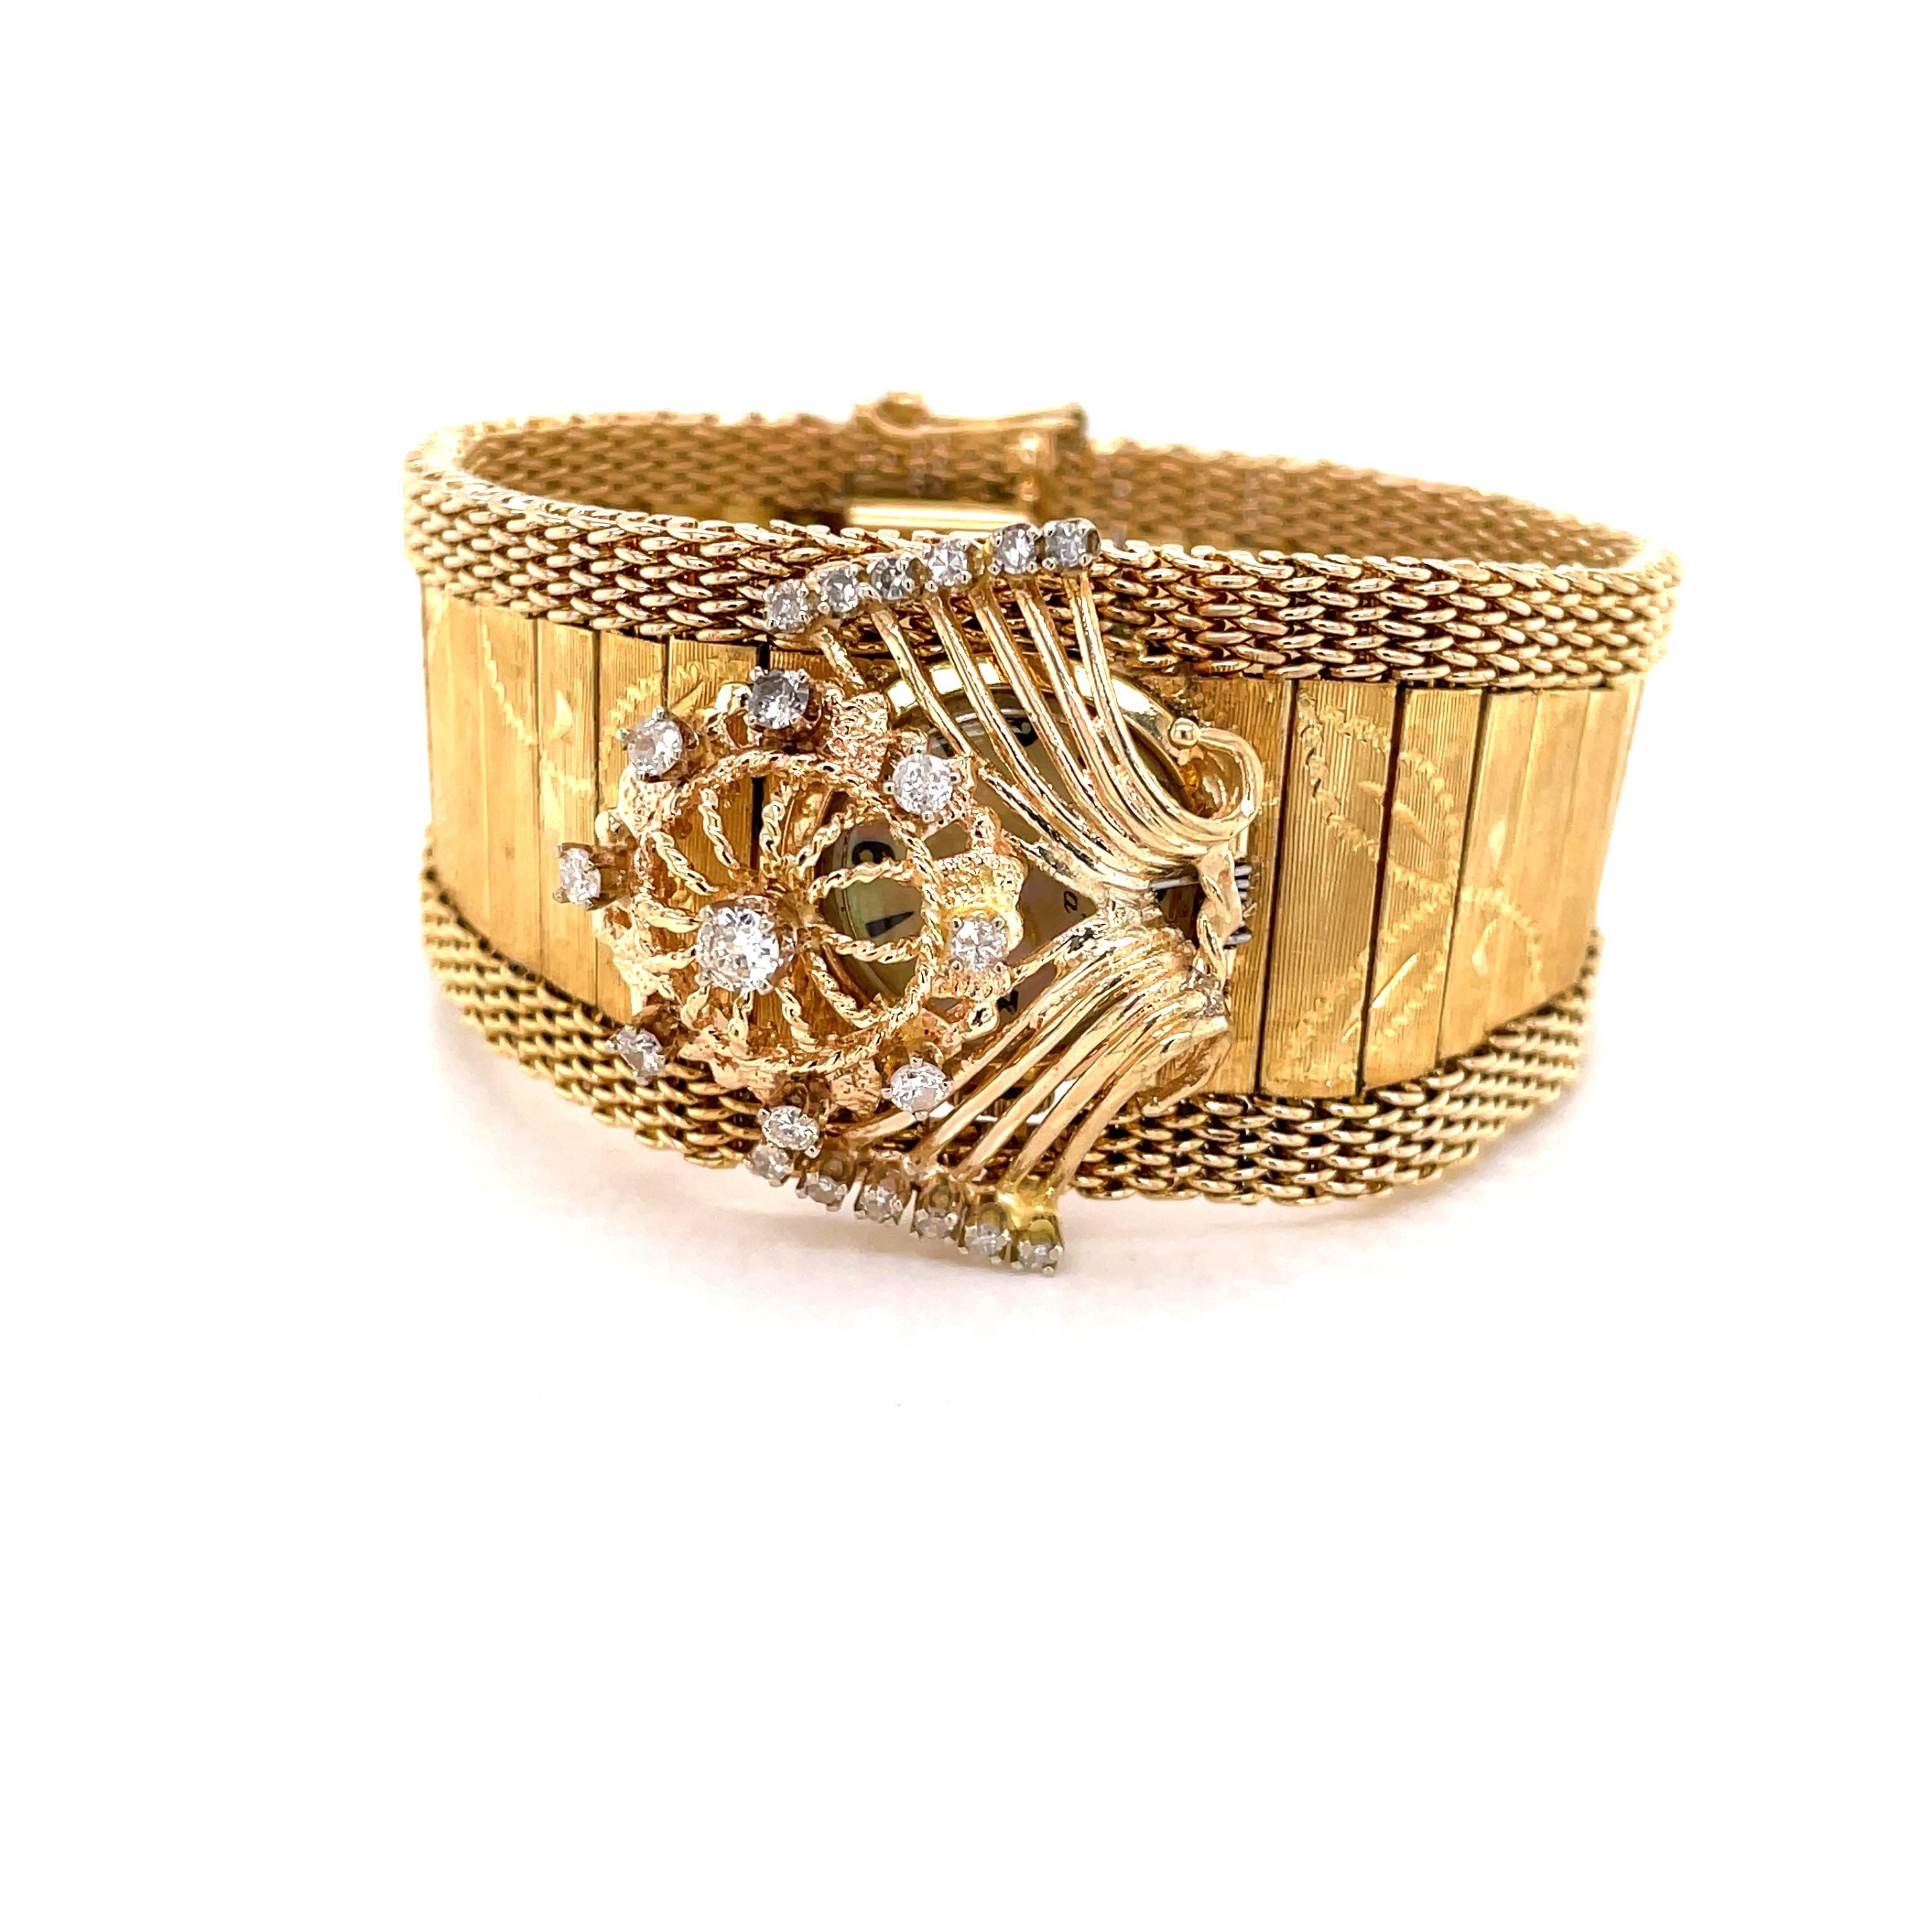 Vintage 14K Yellow Gold Floral Bracelet Hidden Wrist Watch w Diamond Charm For Sale 5